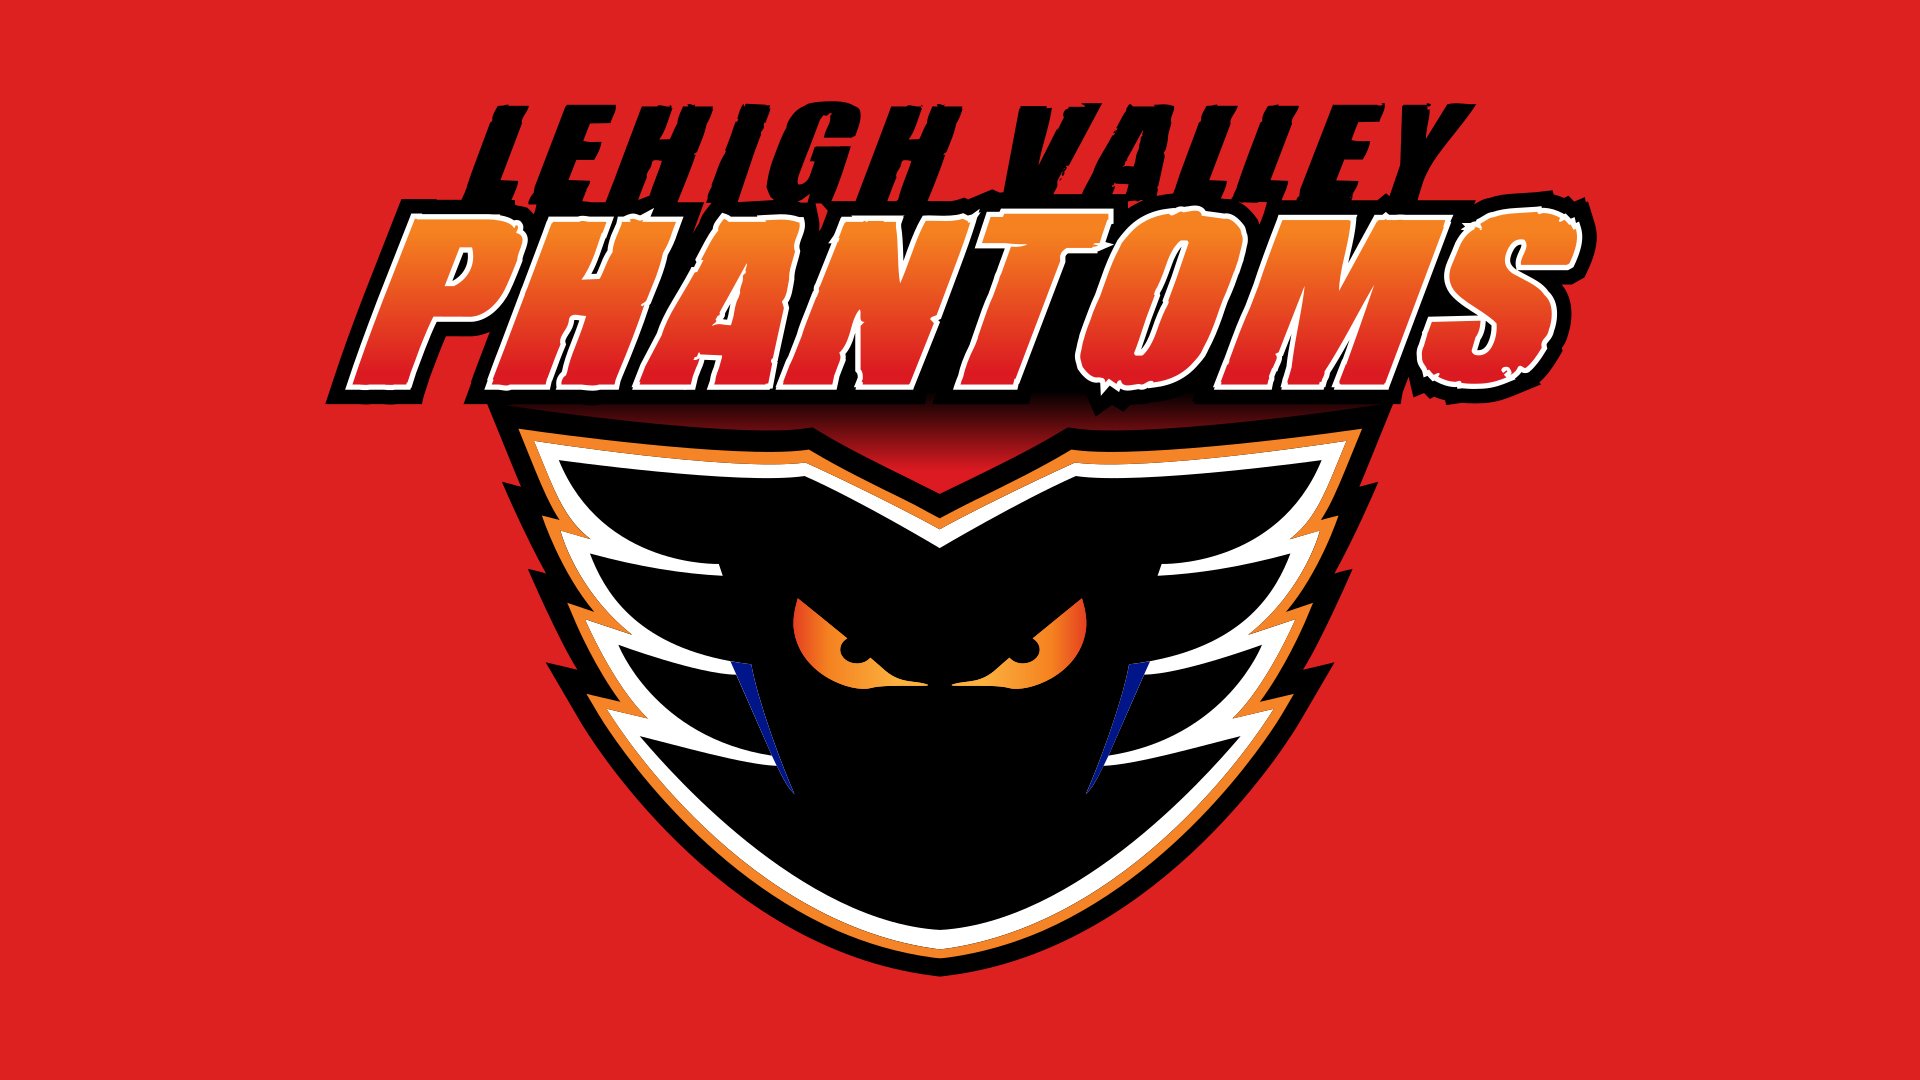 Lehigh Valley Phantoms on X: The all-new #LVPhantoms third